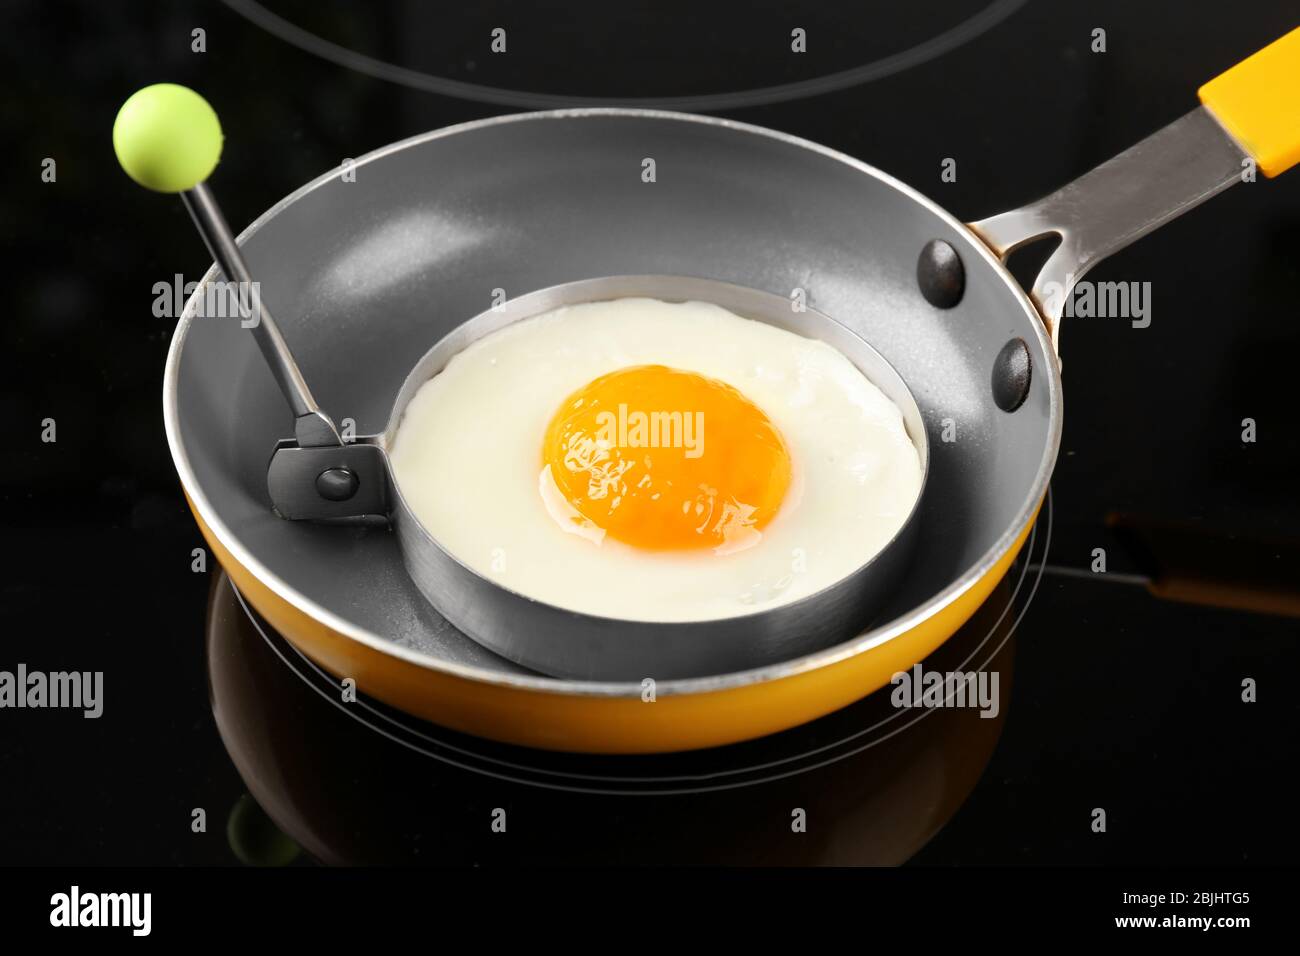 https://c8.alamy.com/comp/2BJHTG5/cooking-of-delicious-sunny-side-up-egg-in-mold-2BJHTG5.jpg